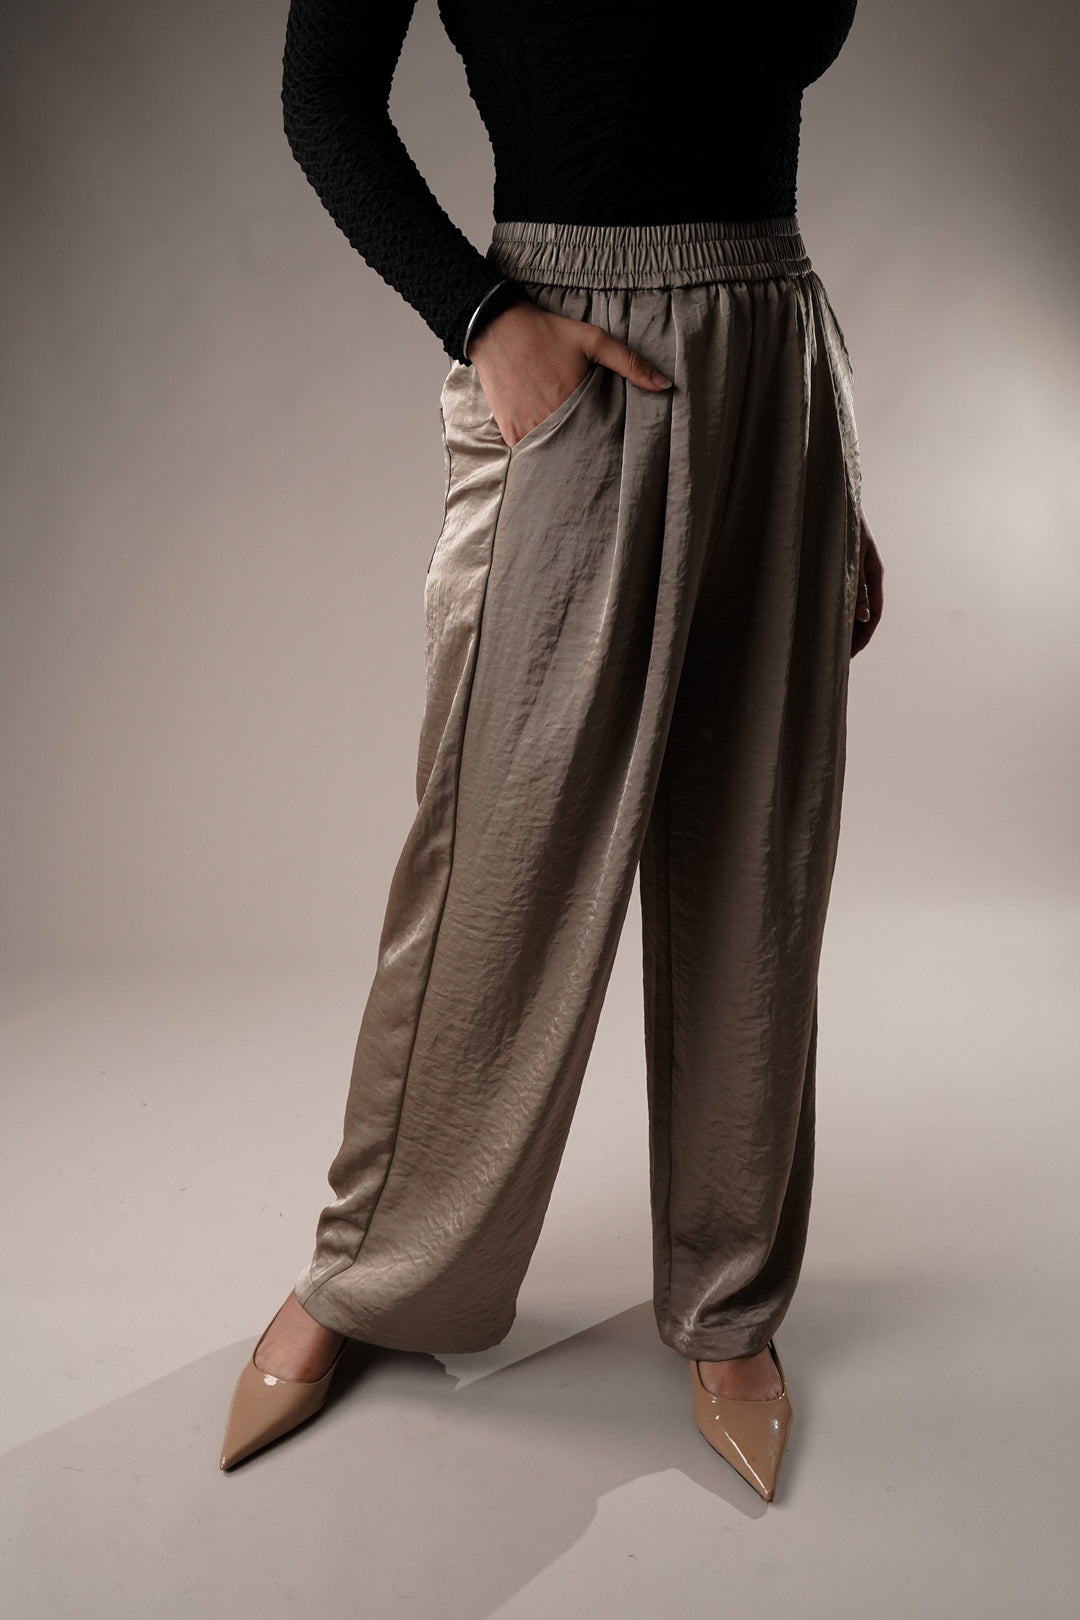 Satin blend trousers for elegant everyday wear